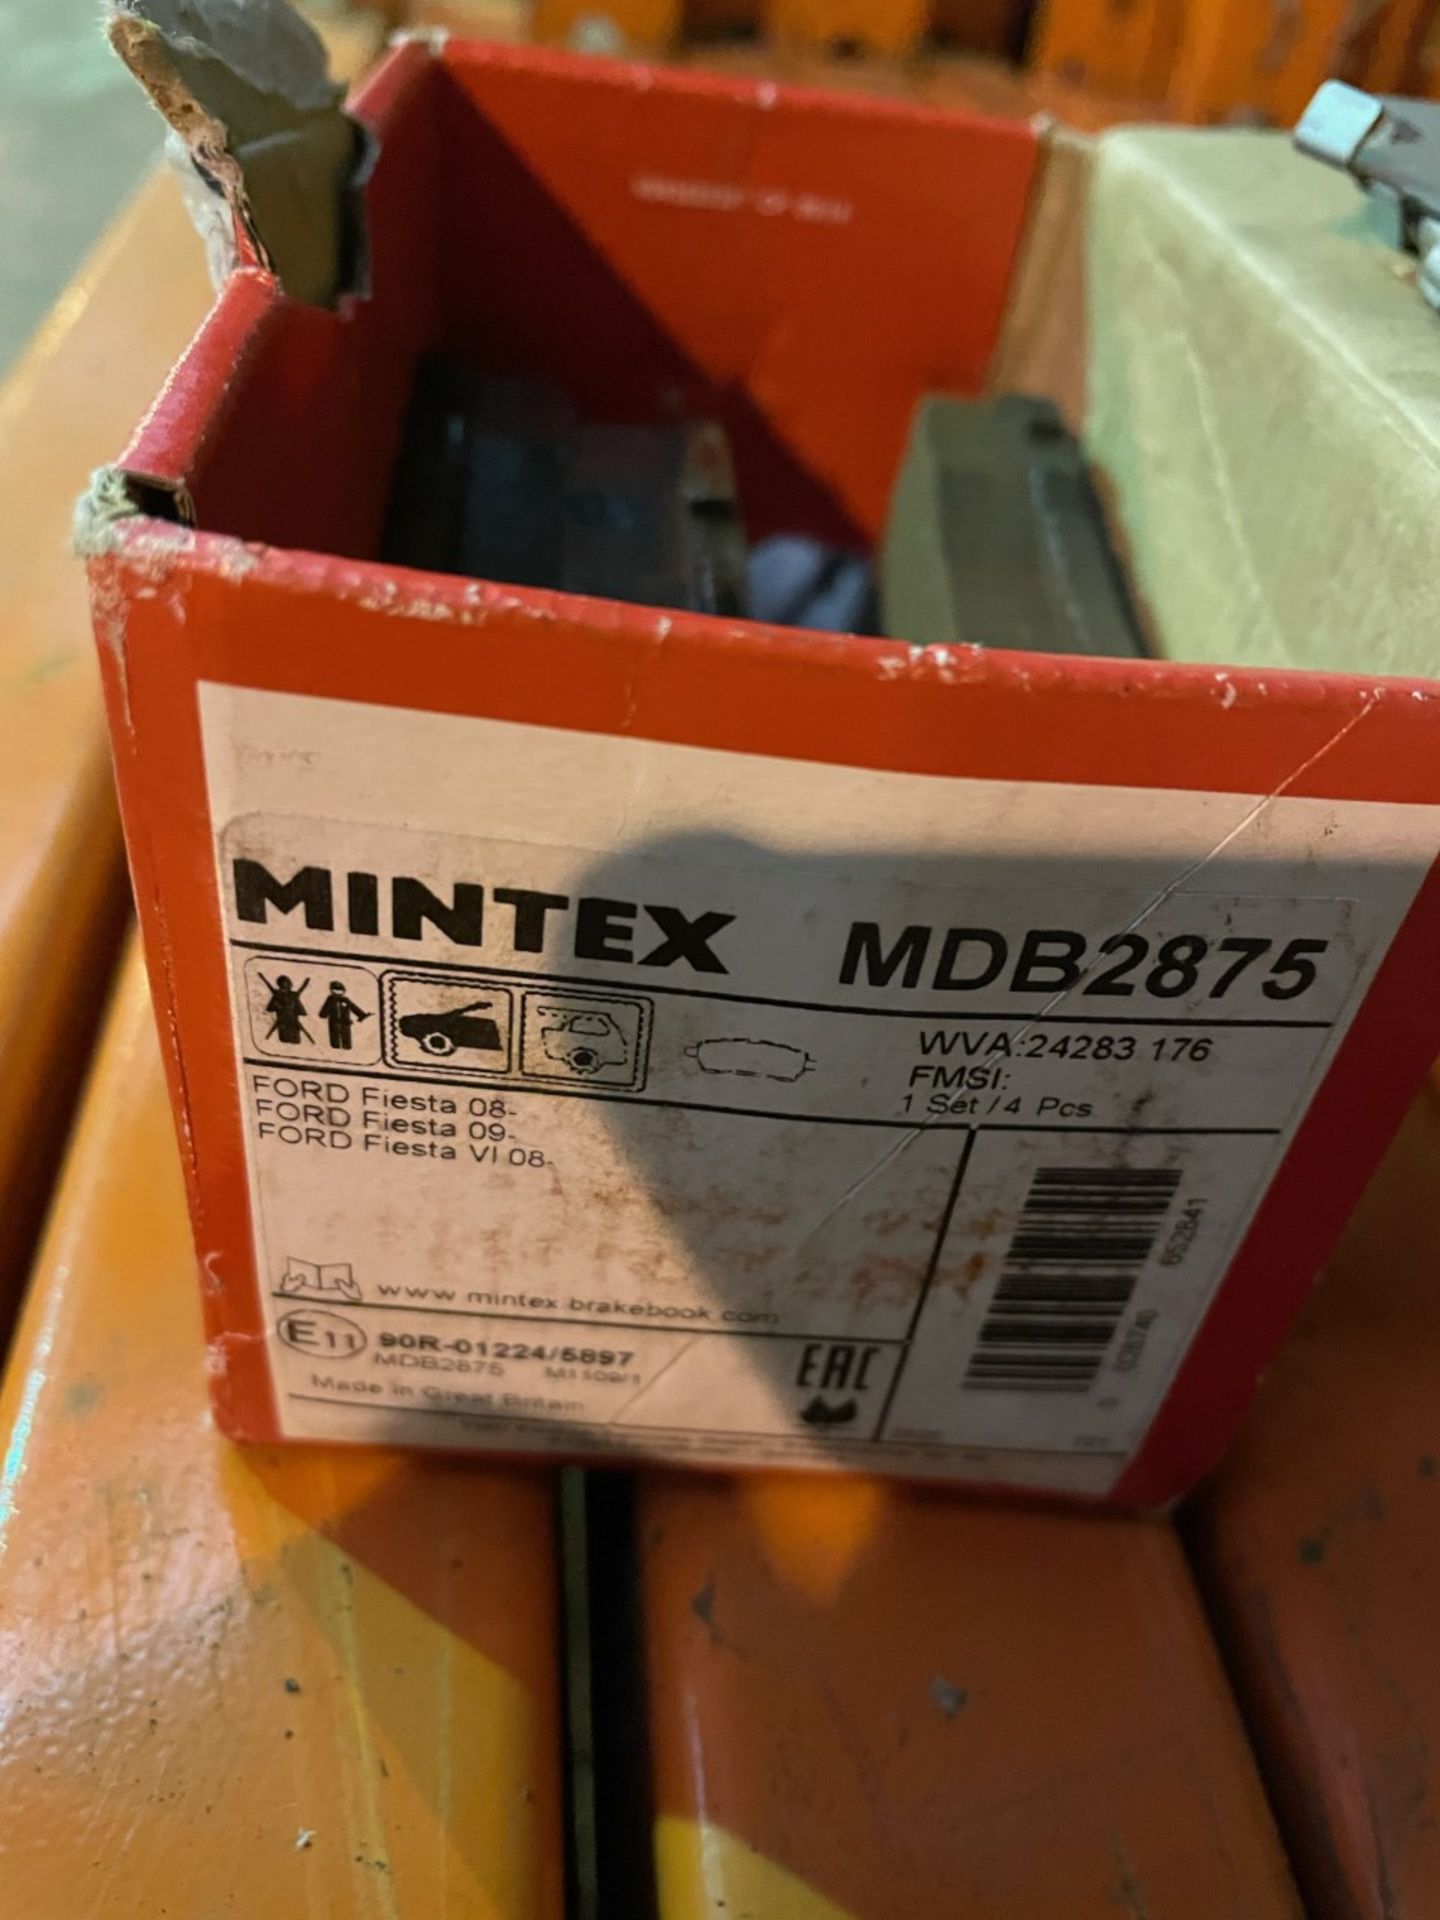 Brand new set of mintex break pads for Ford fiesta 08 onwards MDB2875 set of 4 - Image 3 of 5